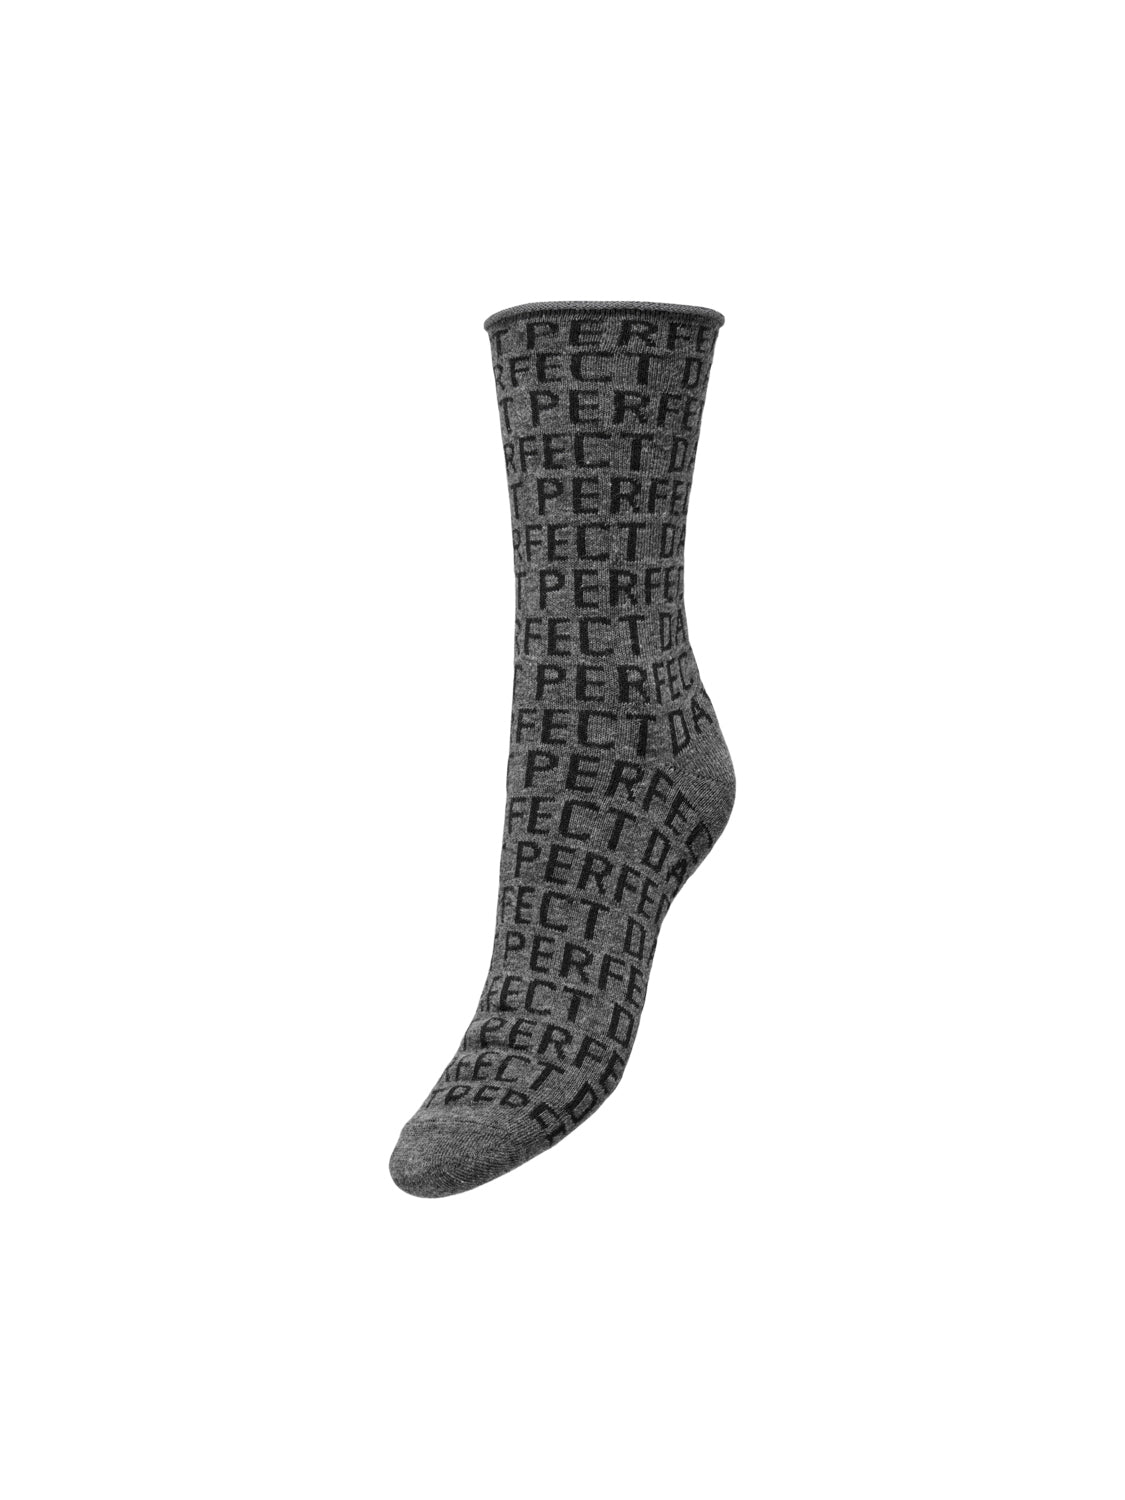 PGLEFFI Socks - Dark Grey Melange